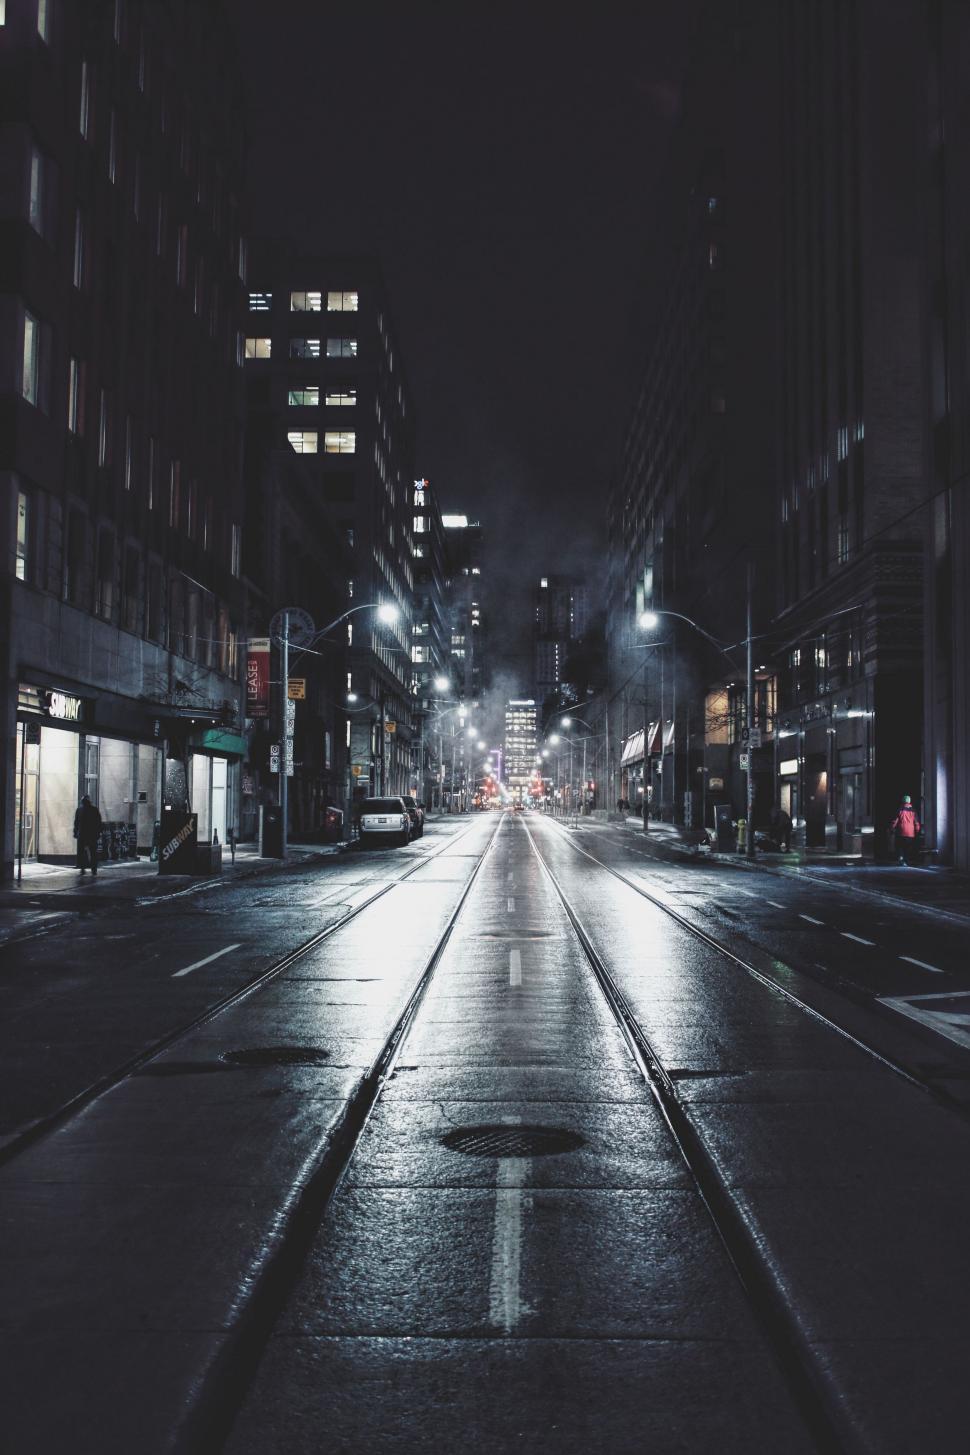 Free Image of Quiet Dark City Street at Night 